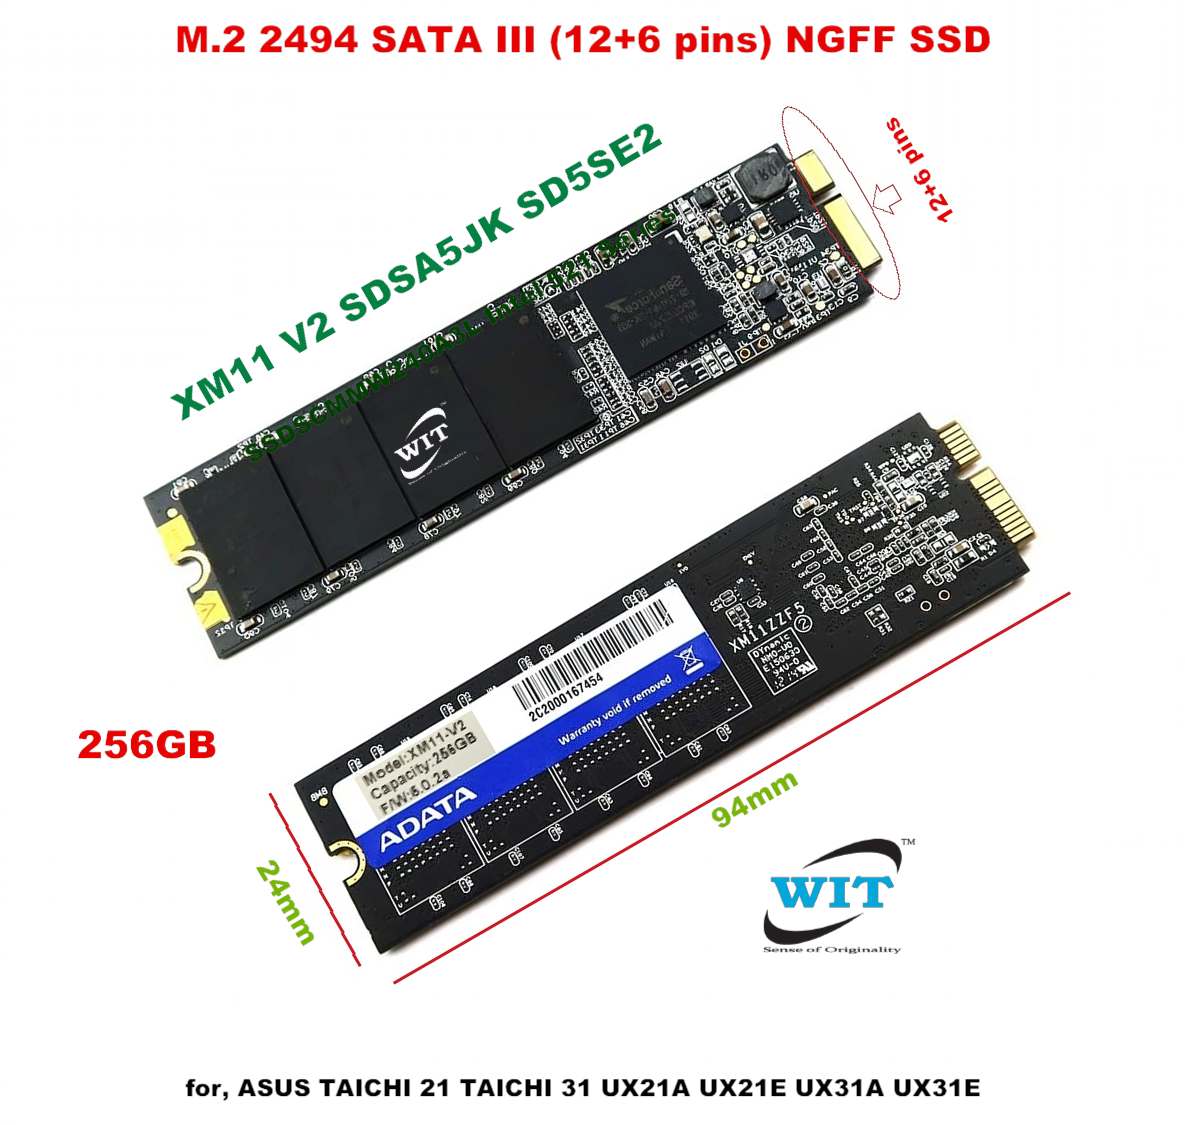 256GB M.2 2494 SATA III (12+6 NGFF SSD (Internal) XM11-V2 for Asus ZenBook UX21,UX31,UX21A,UX31A,UX21E,UX31E UX51 TAICHI21 TAICHI31 SD5SE2-256G-1002E - Computers